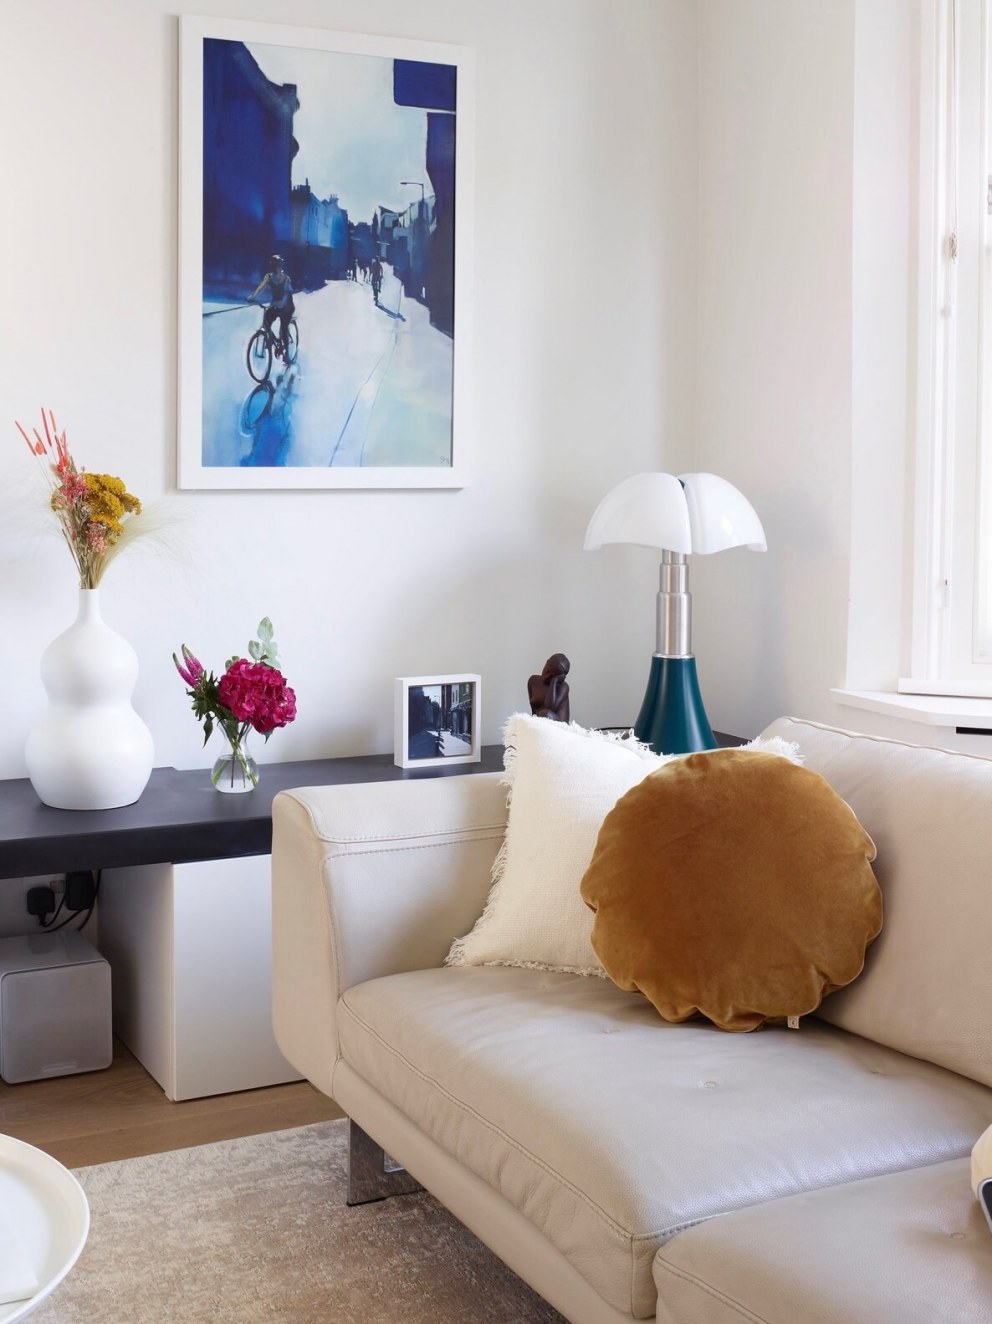 Fulham Family Home | living room 2 | Interior Designers